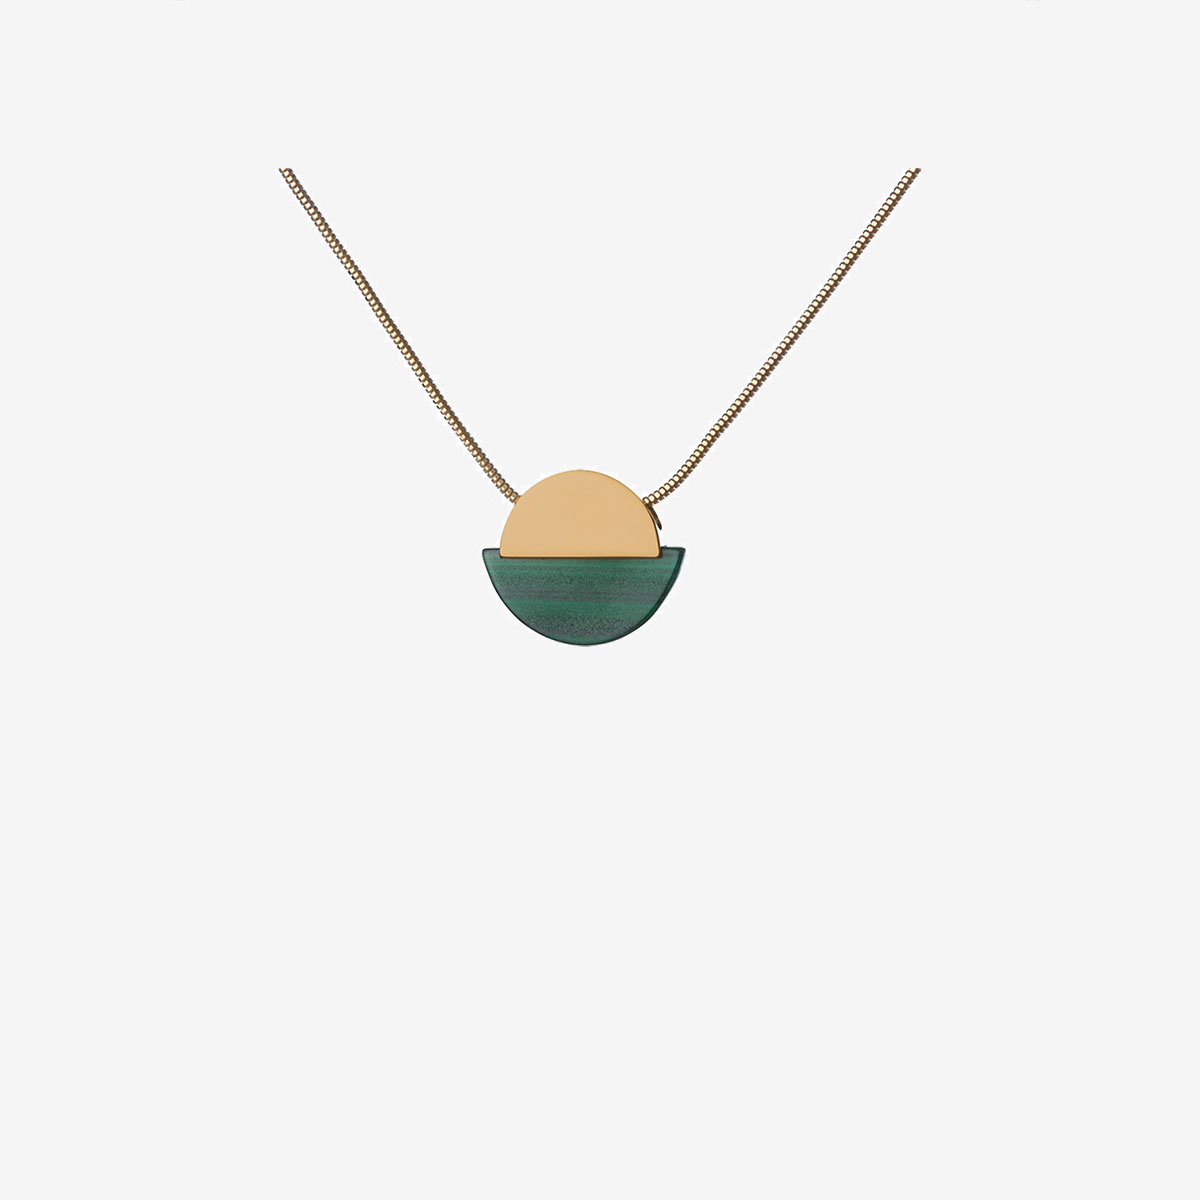 Handmade Ova necklace in 9k or 18k gold, sterling silver, malachite designed by Belen Bajo